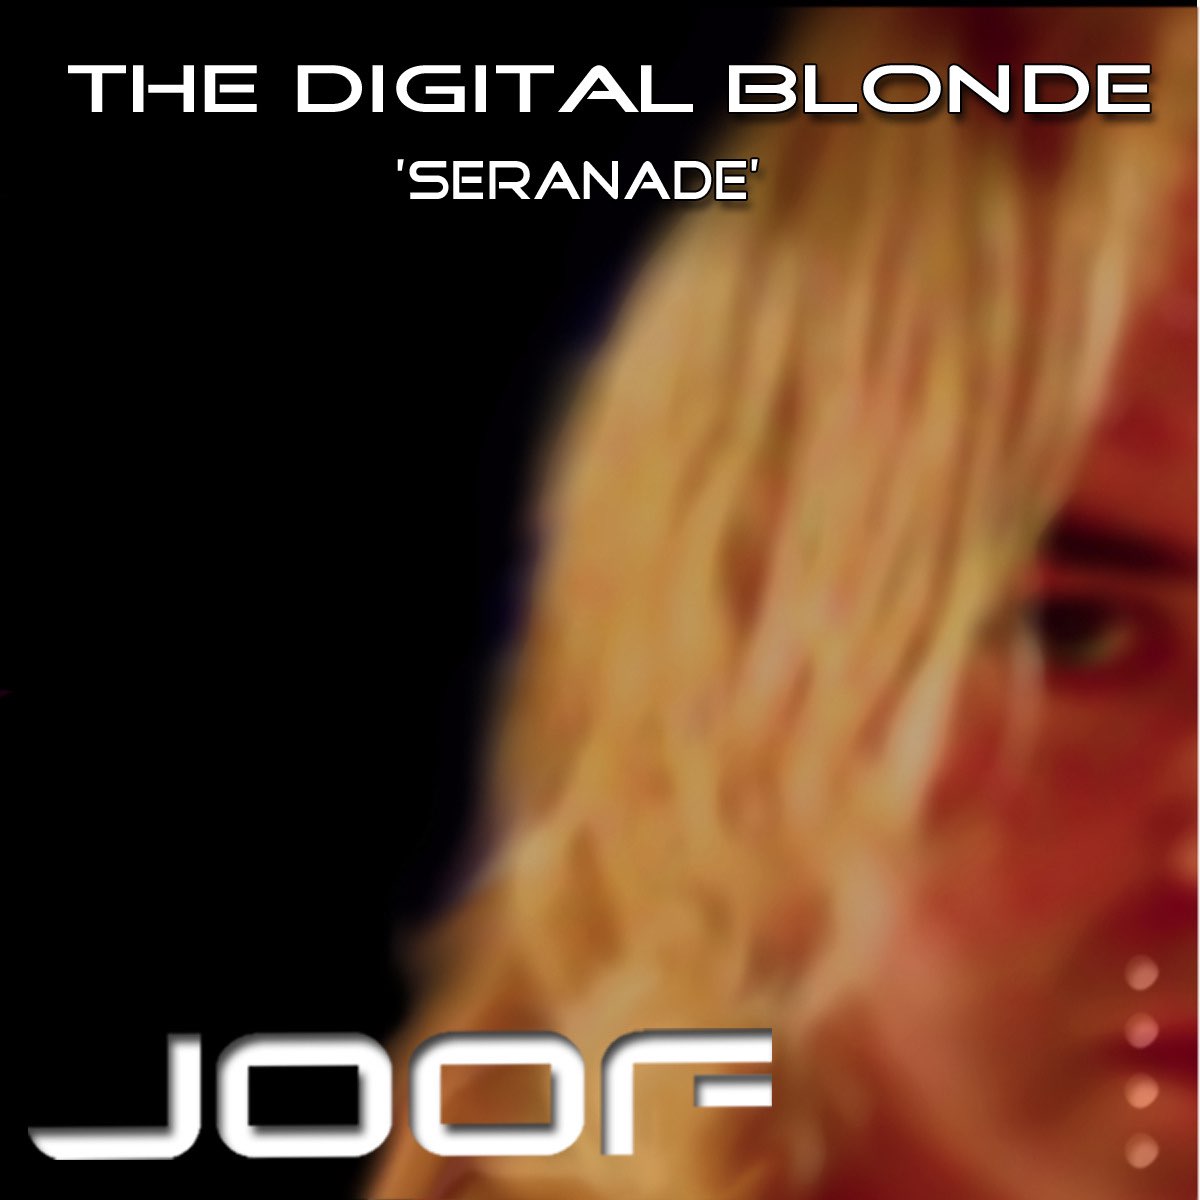 Blonde слушать песни. Blonde альбом. The Digital blonde. The Digital blonde биография. Blondie альбомы.